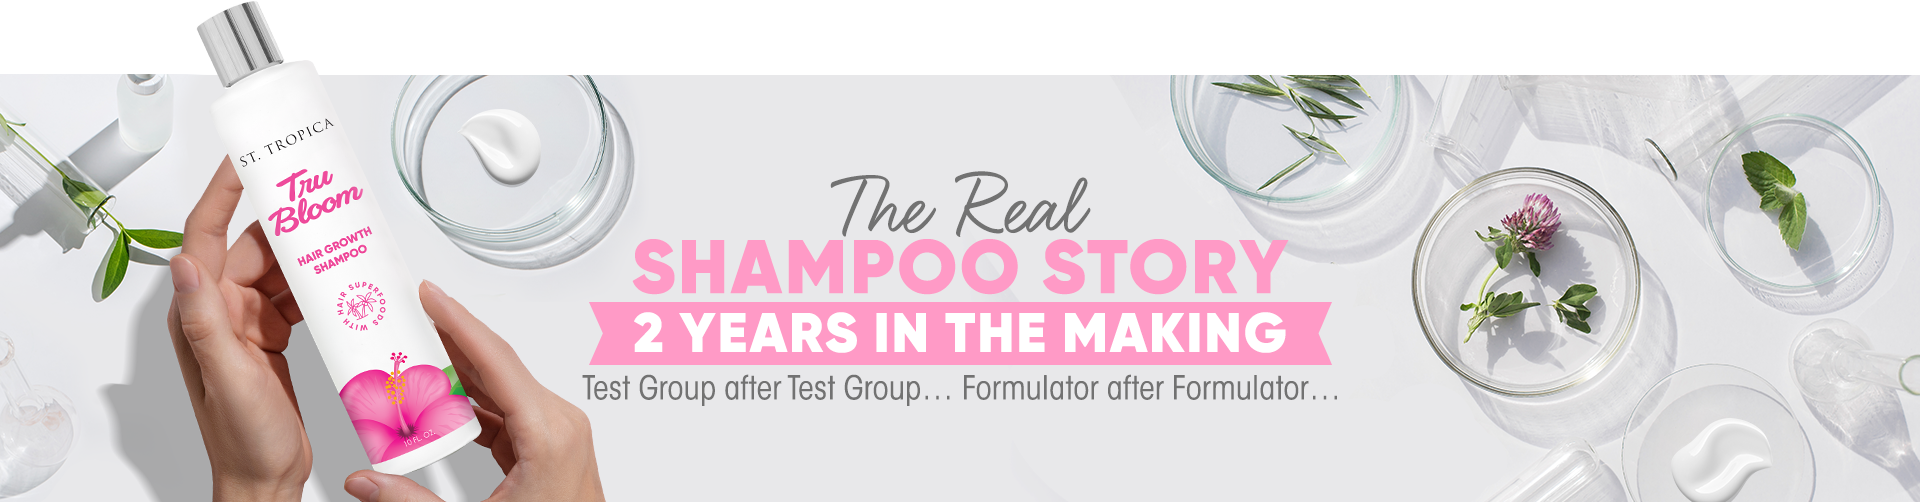 
  
  The Real Shampoo Story
  
